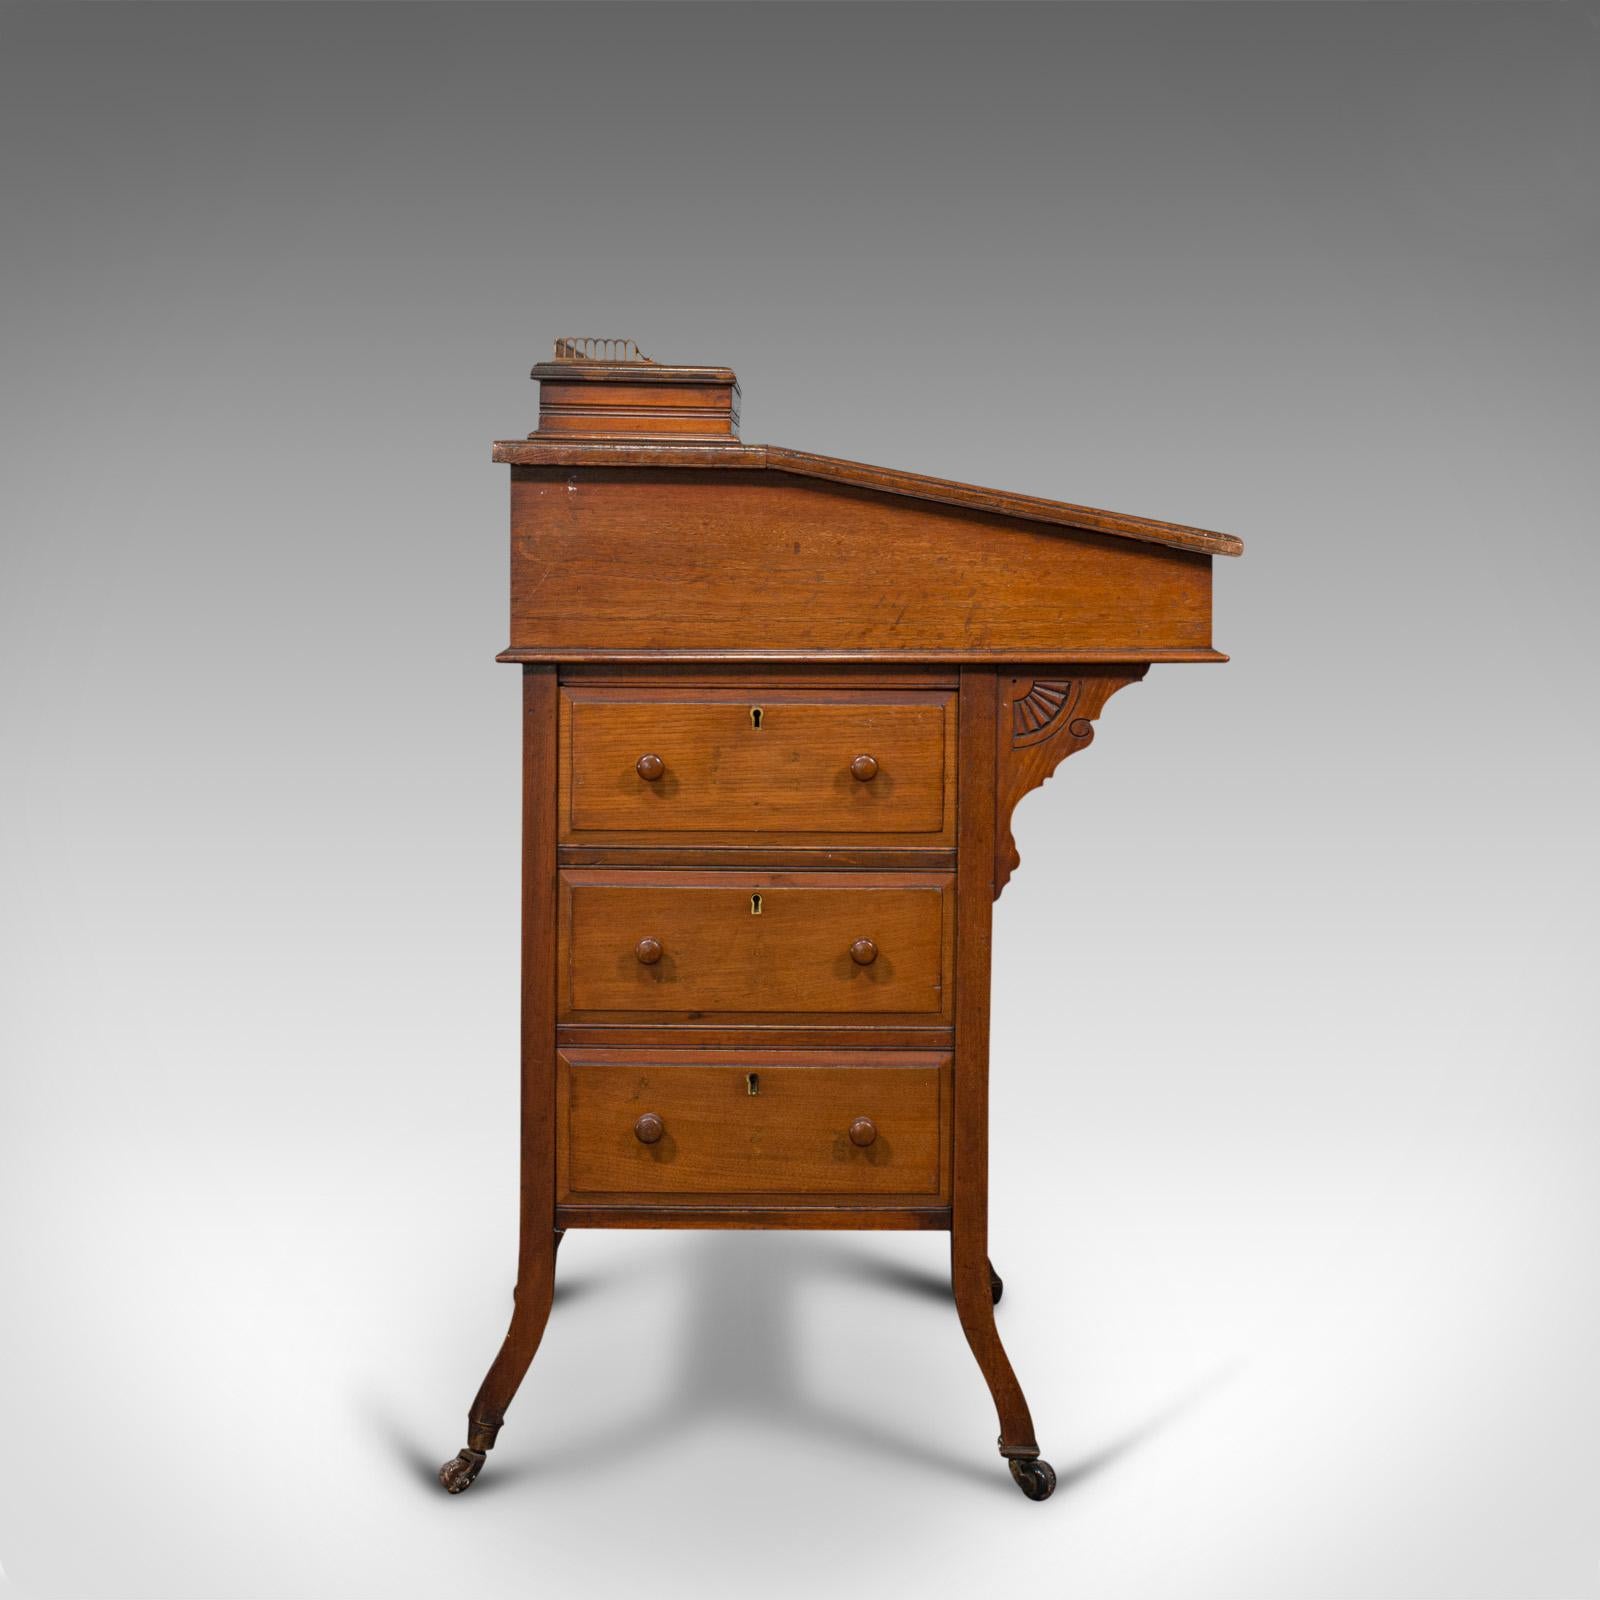 British Antique Davenport, English Walnut, Bird's-Eye Maple Writing Desk, Victorian